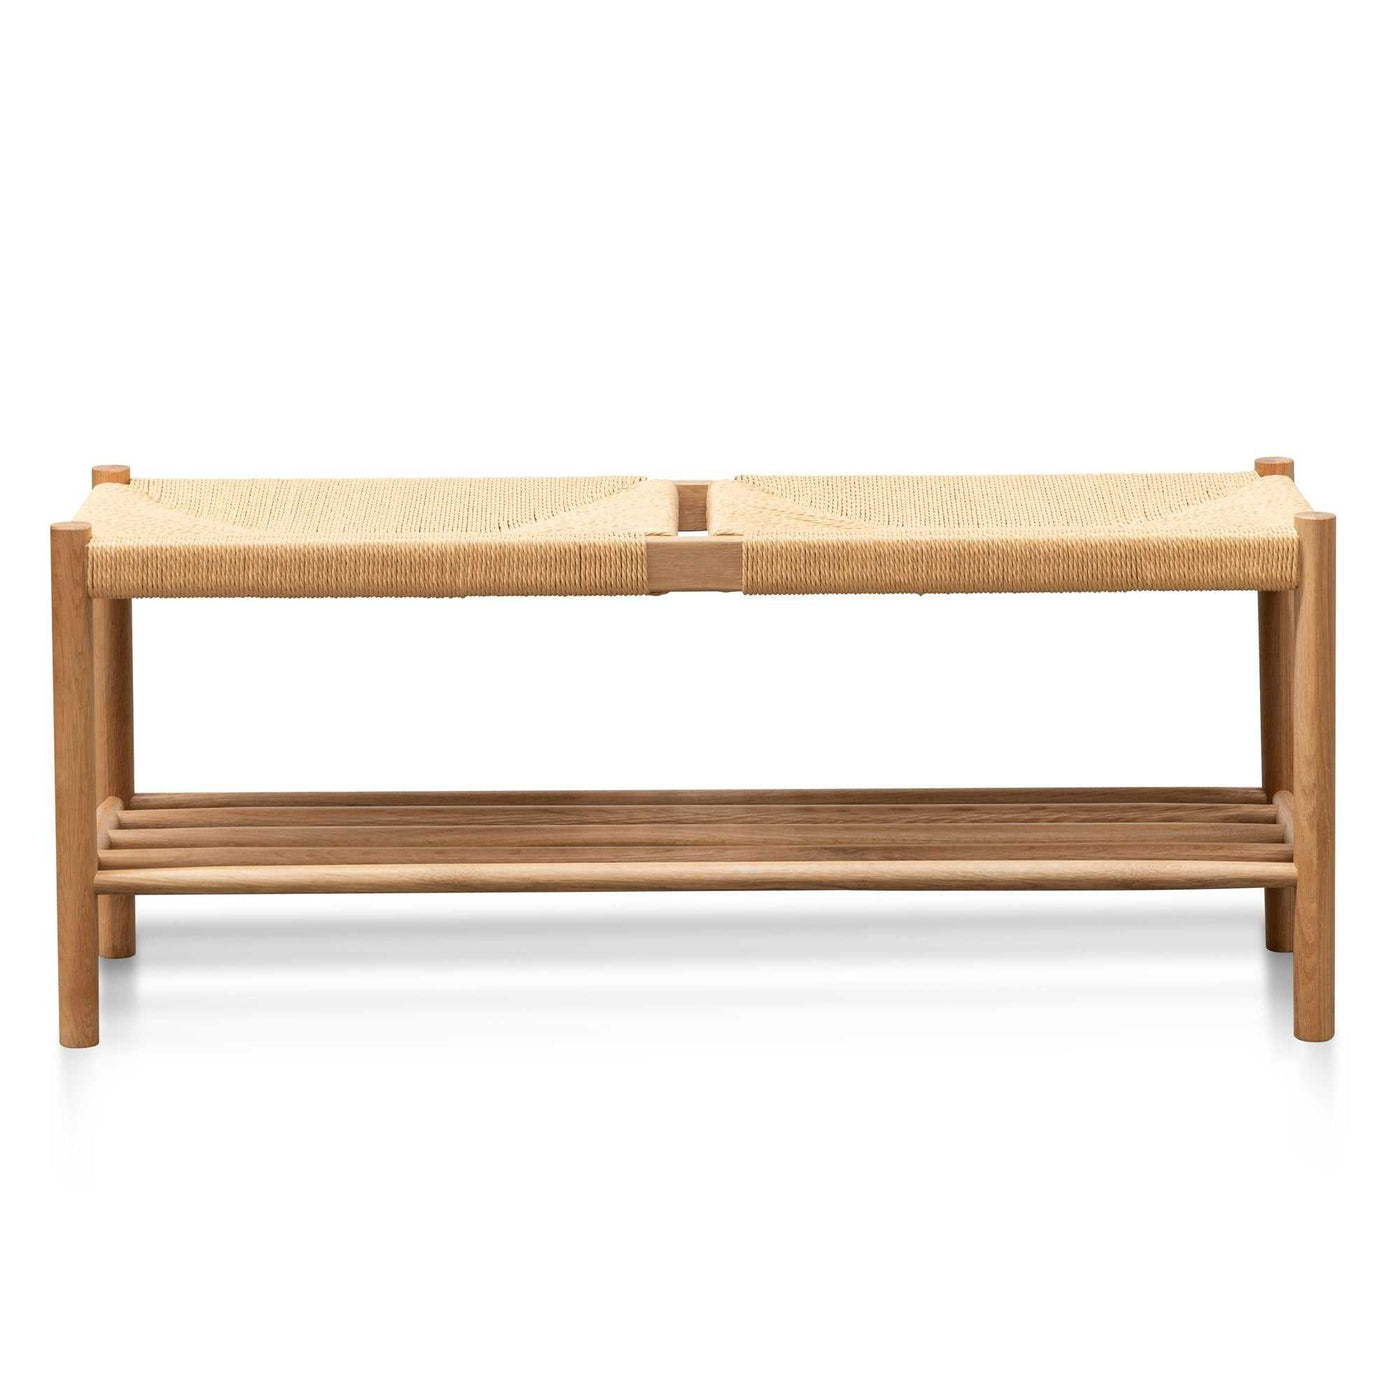 110cm Oak Bench - Natural Seat